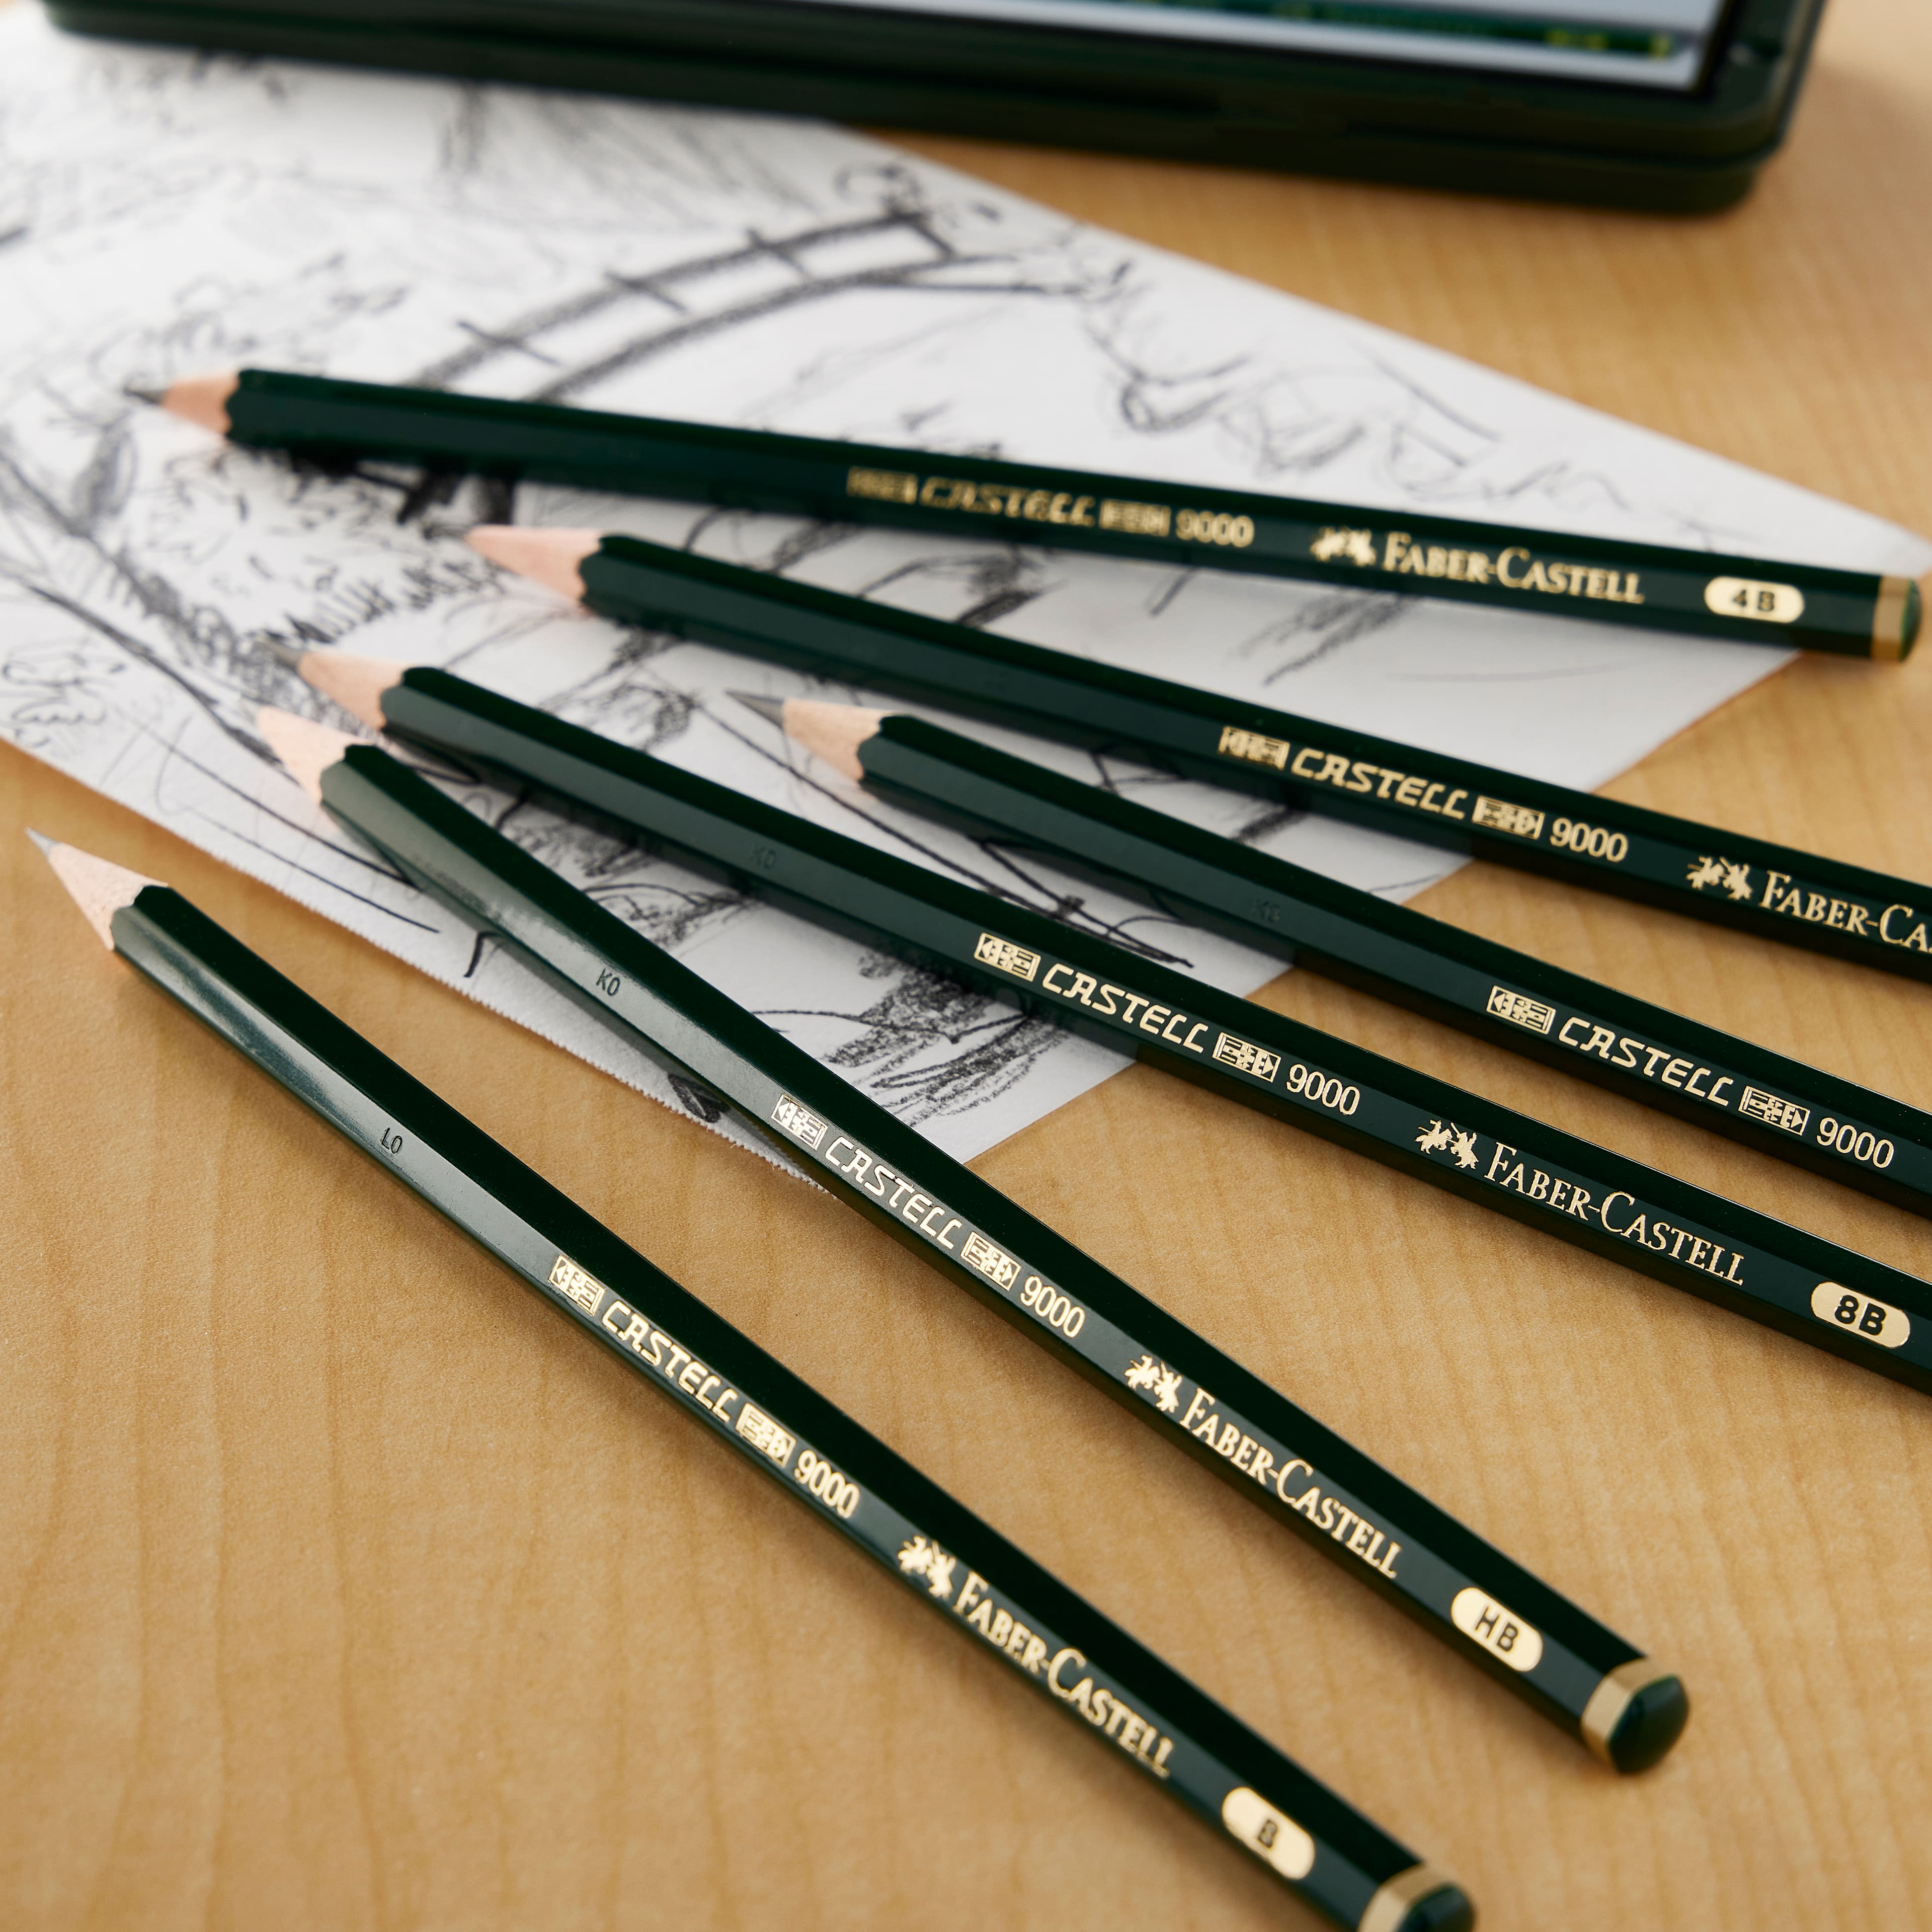 Castell 9000 Graphite Pencils, Tin of 6 - #119063